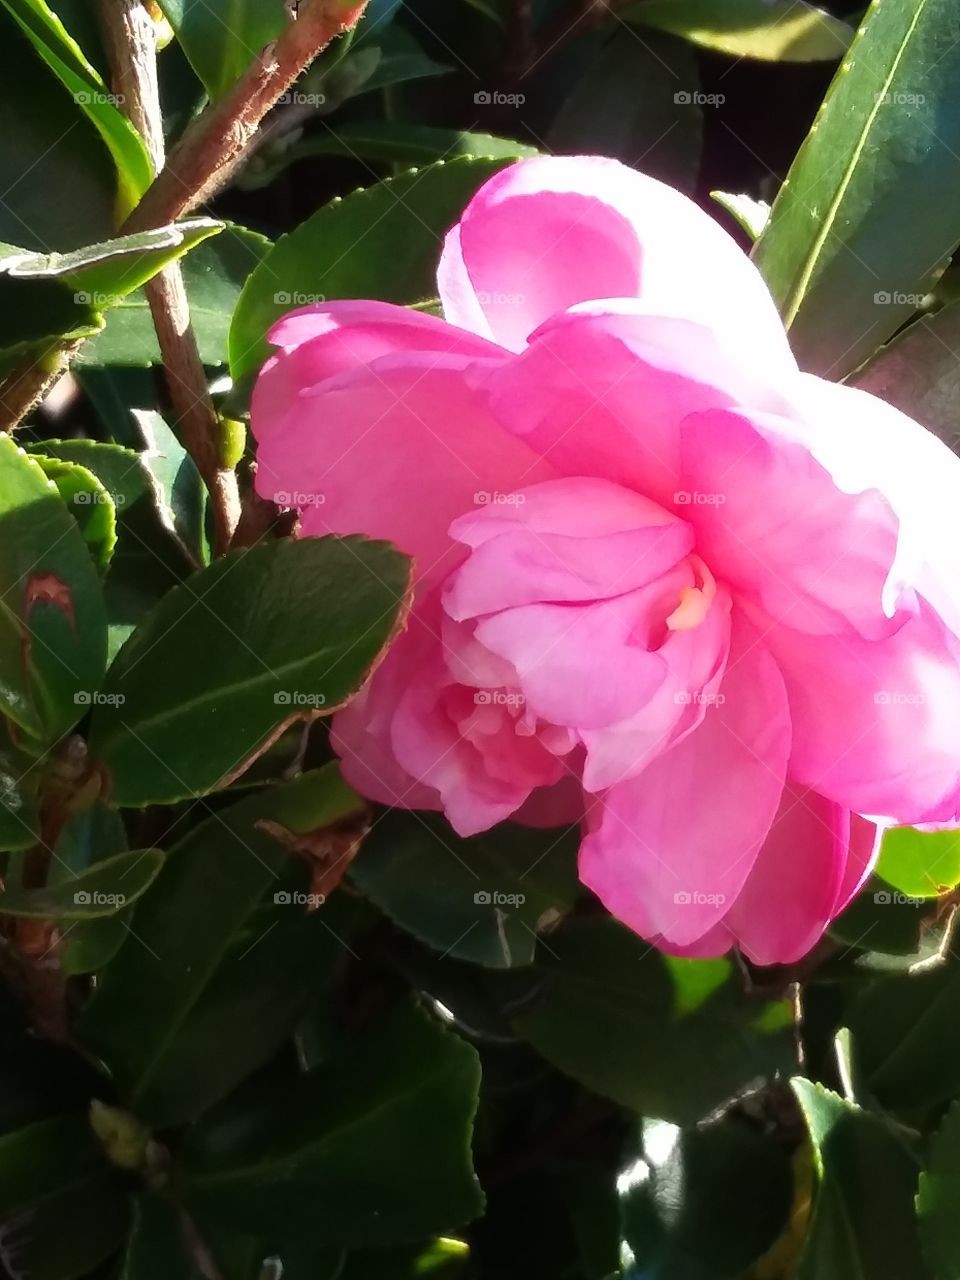 beautiful pink magnolia